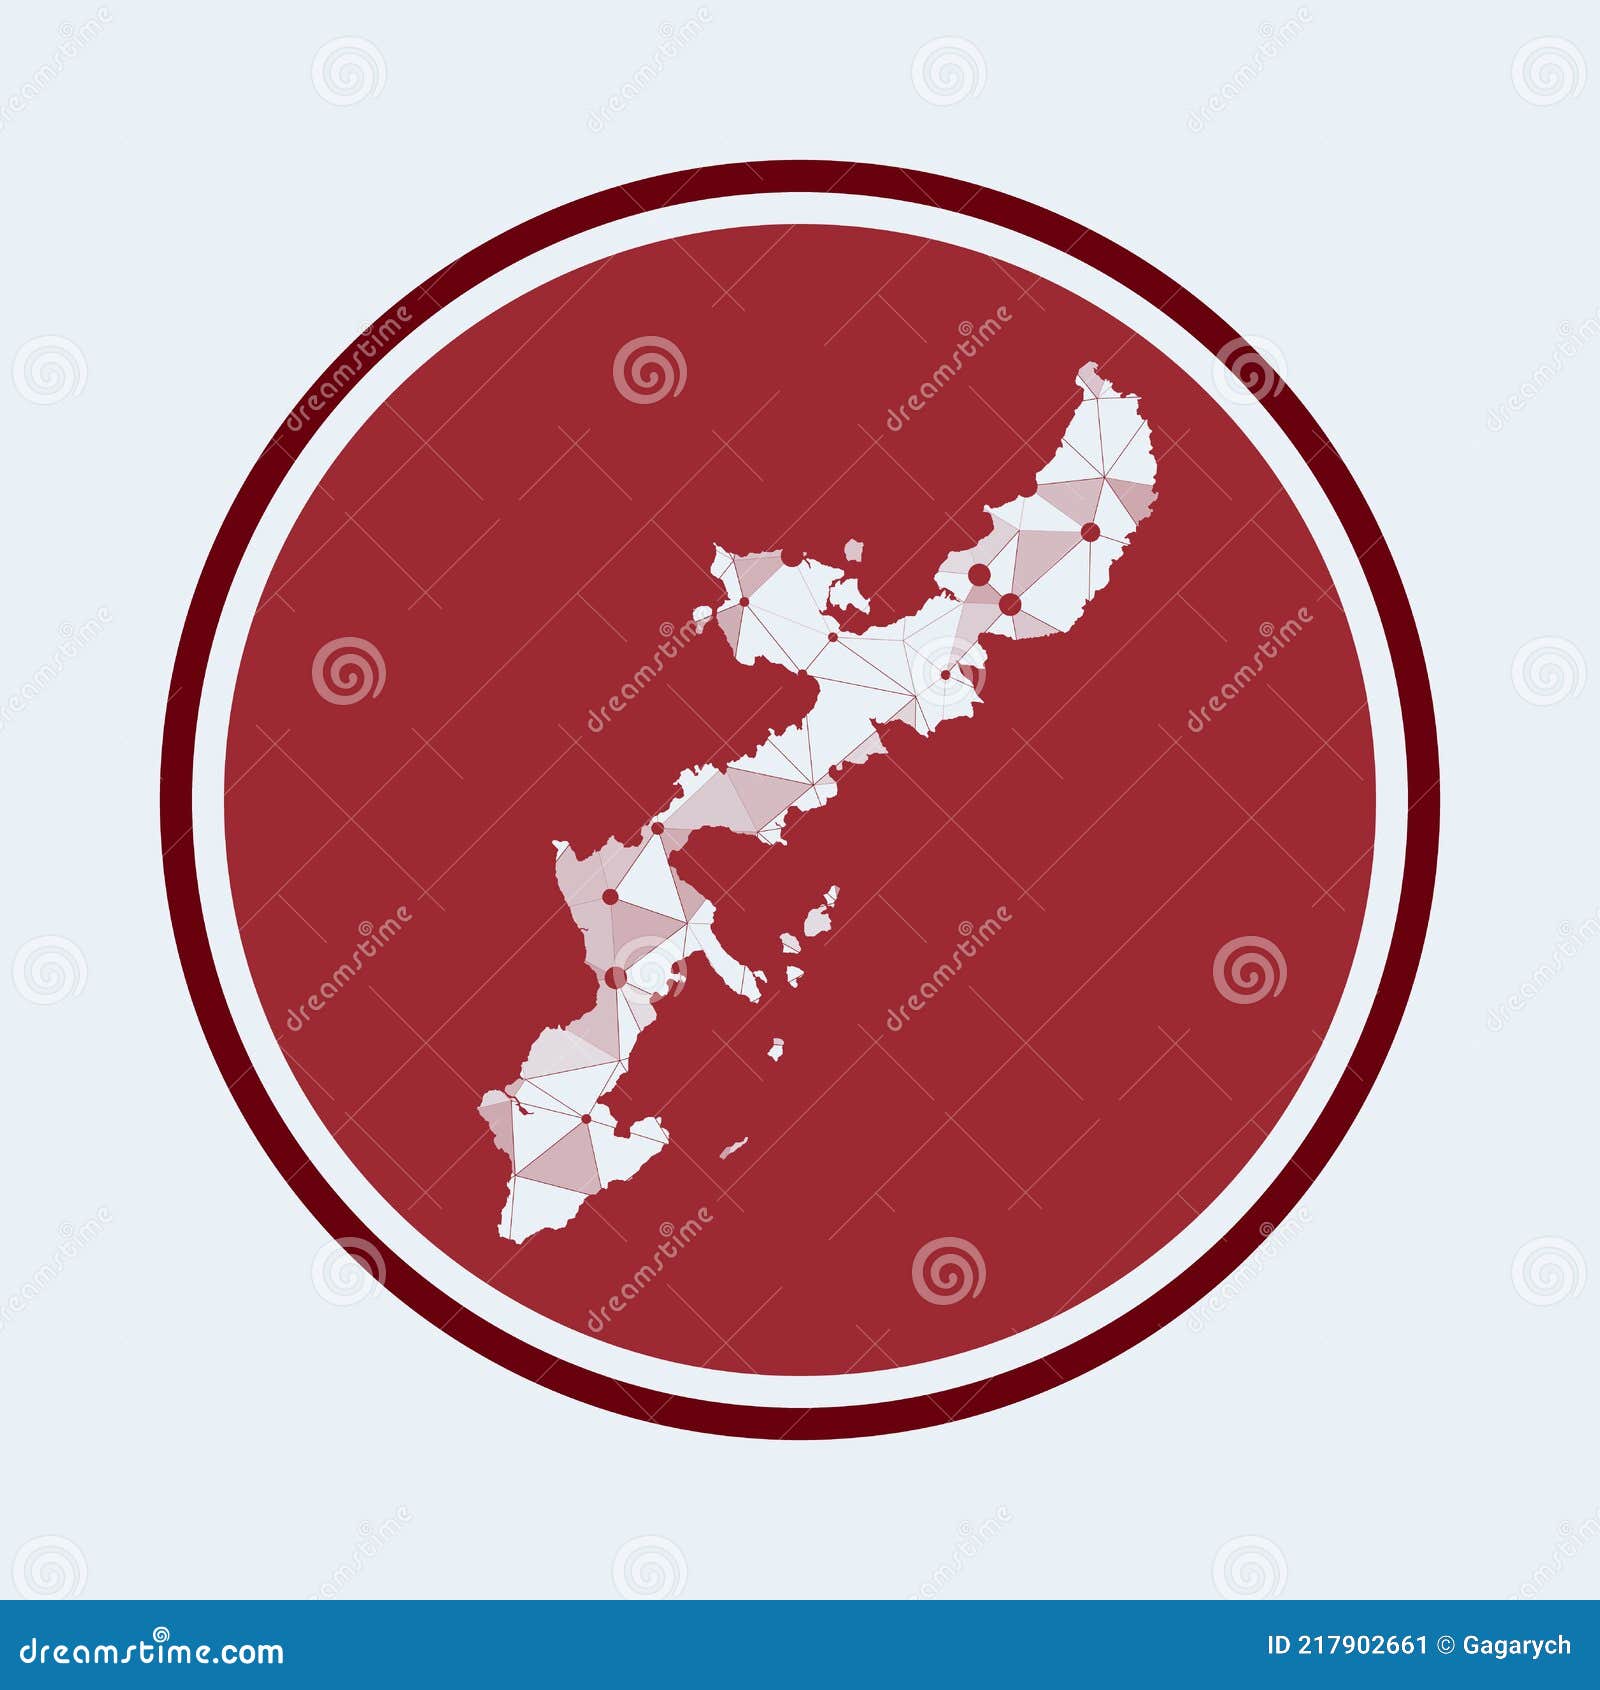 Logo Okinawa Stock Illustrations – 117 Logo Okinawa Stock 